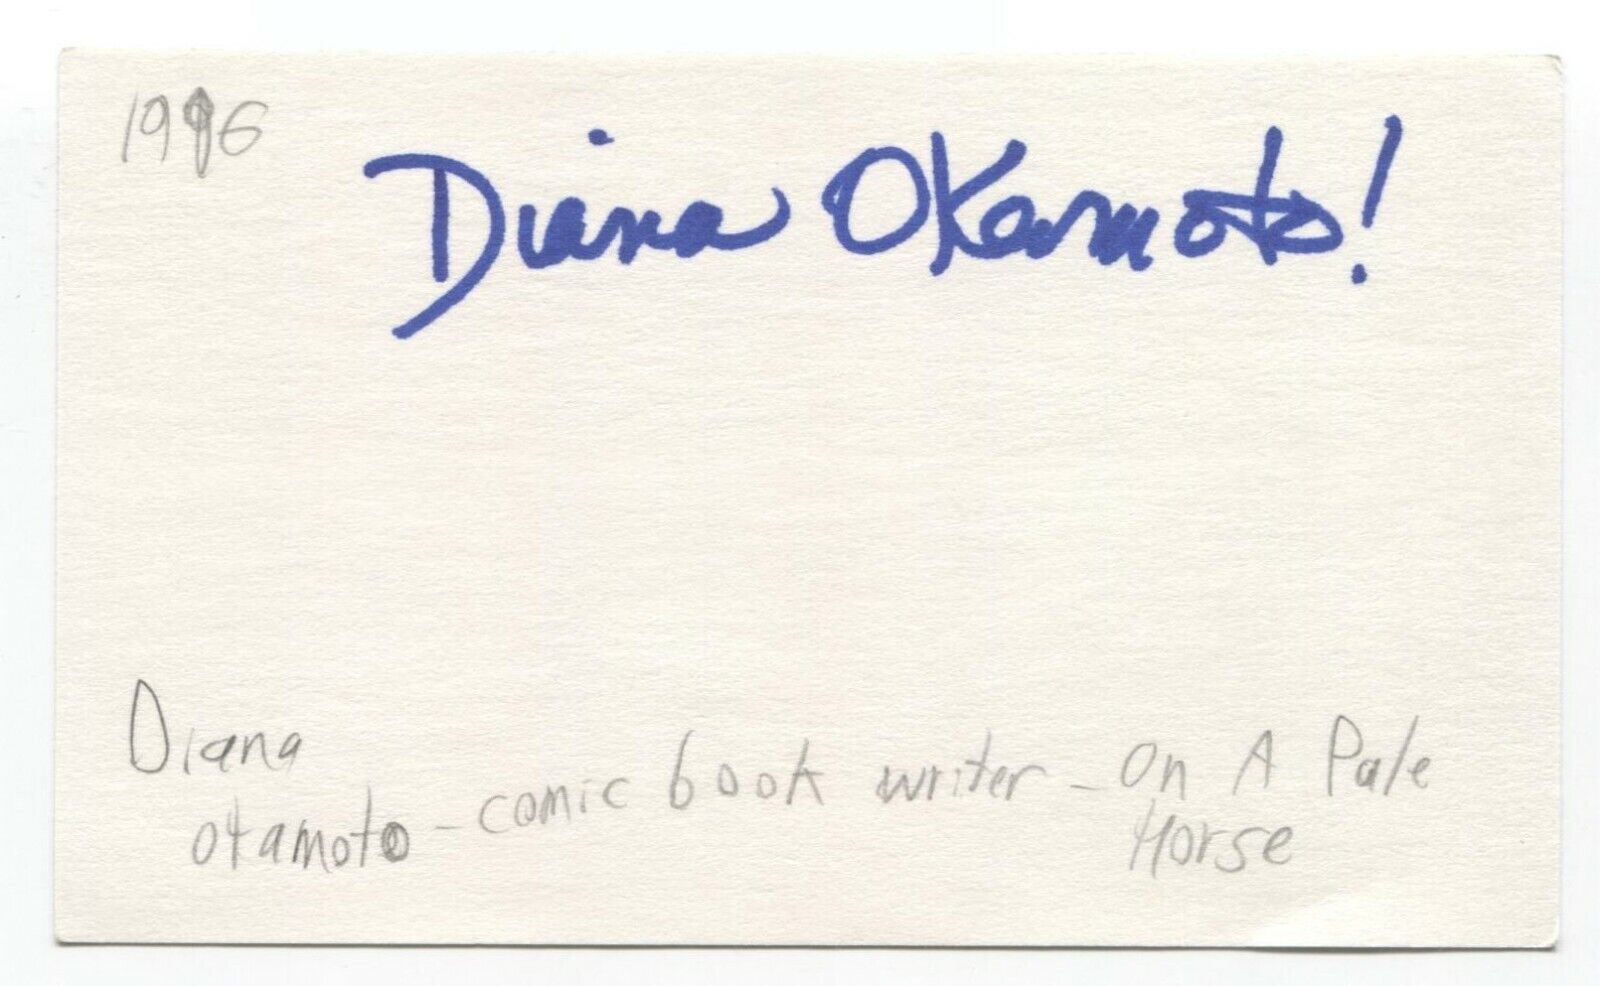 Diana Okamoto Signed Index Card Autograph Signature Comic Artist Writer